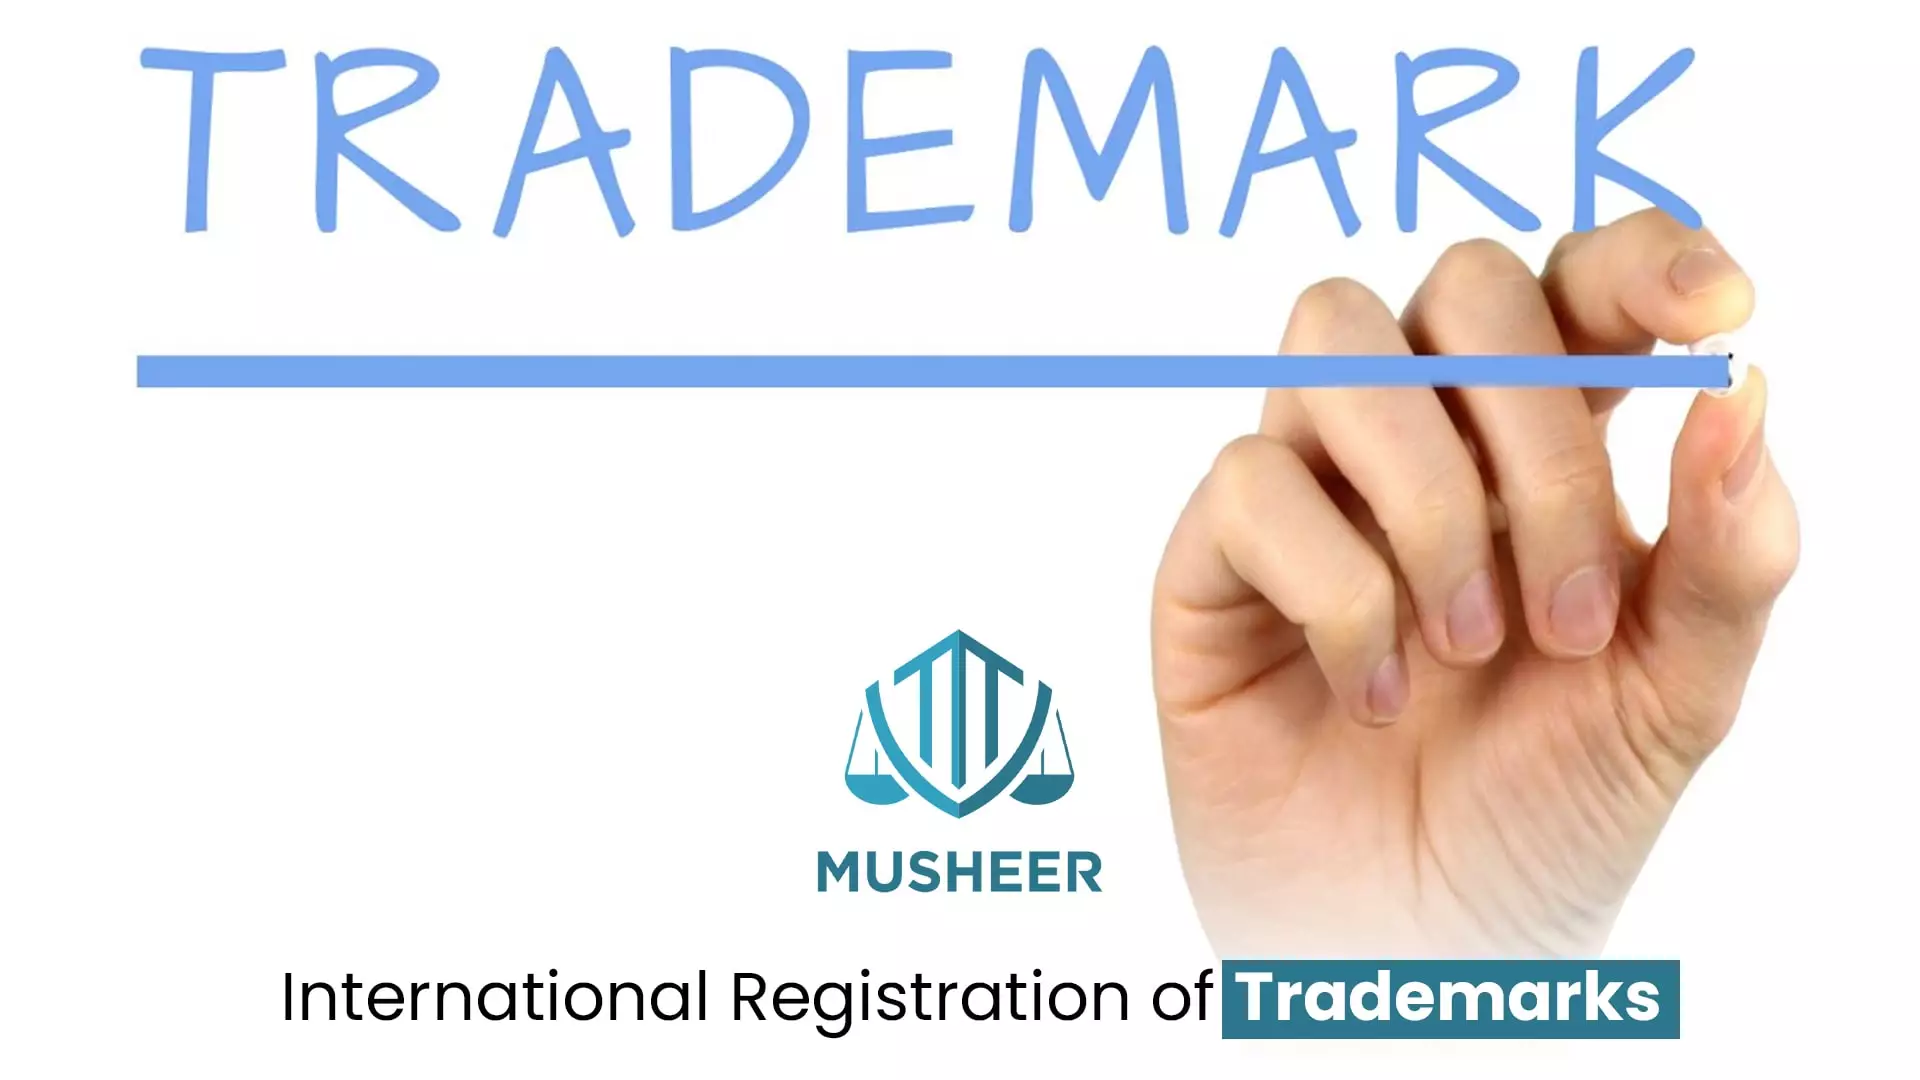 How to register Trademarks internationally